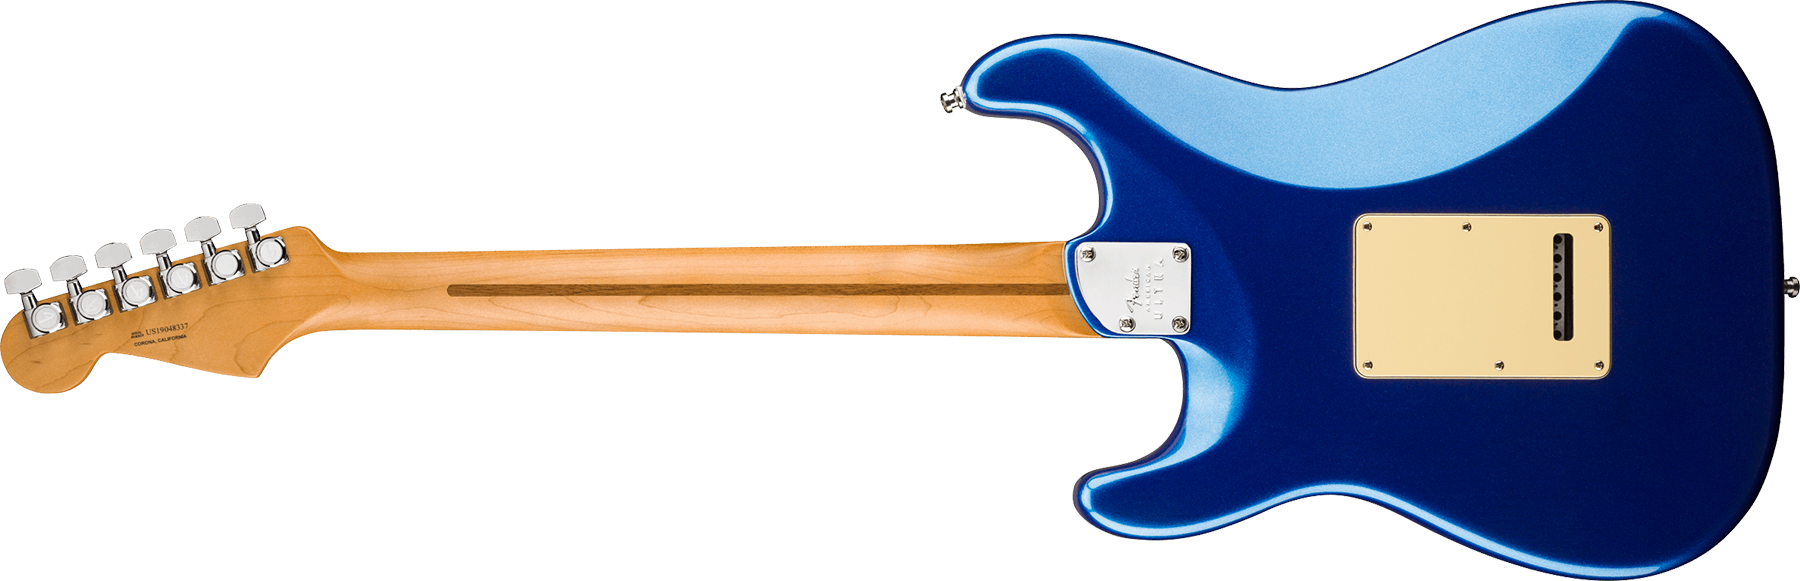 Fender Strat American Ultra 2019 Usa Mn - Cobra Blue - Guitarra eléctrica con forma de str. - Variation 1